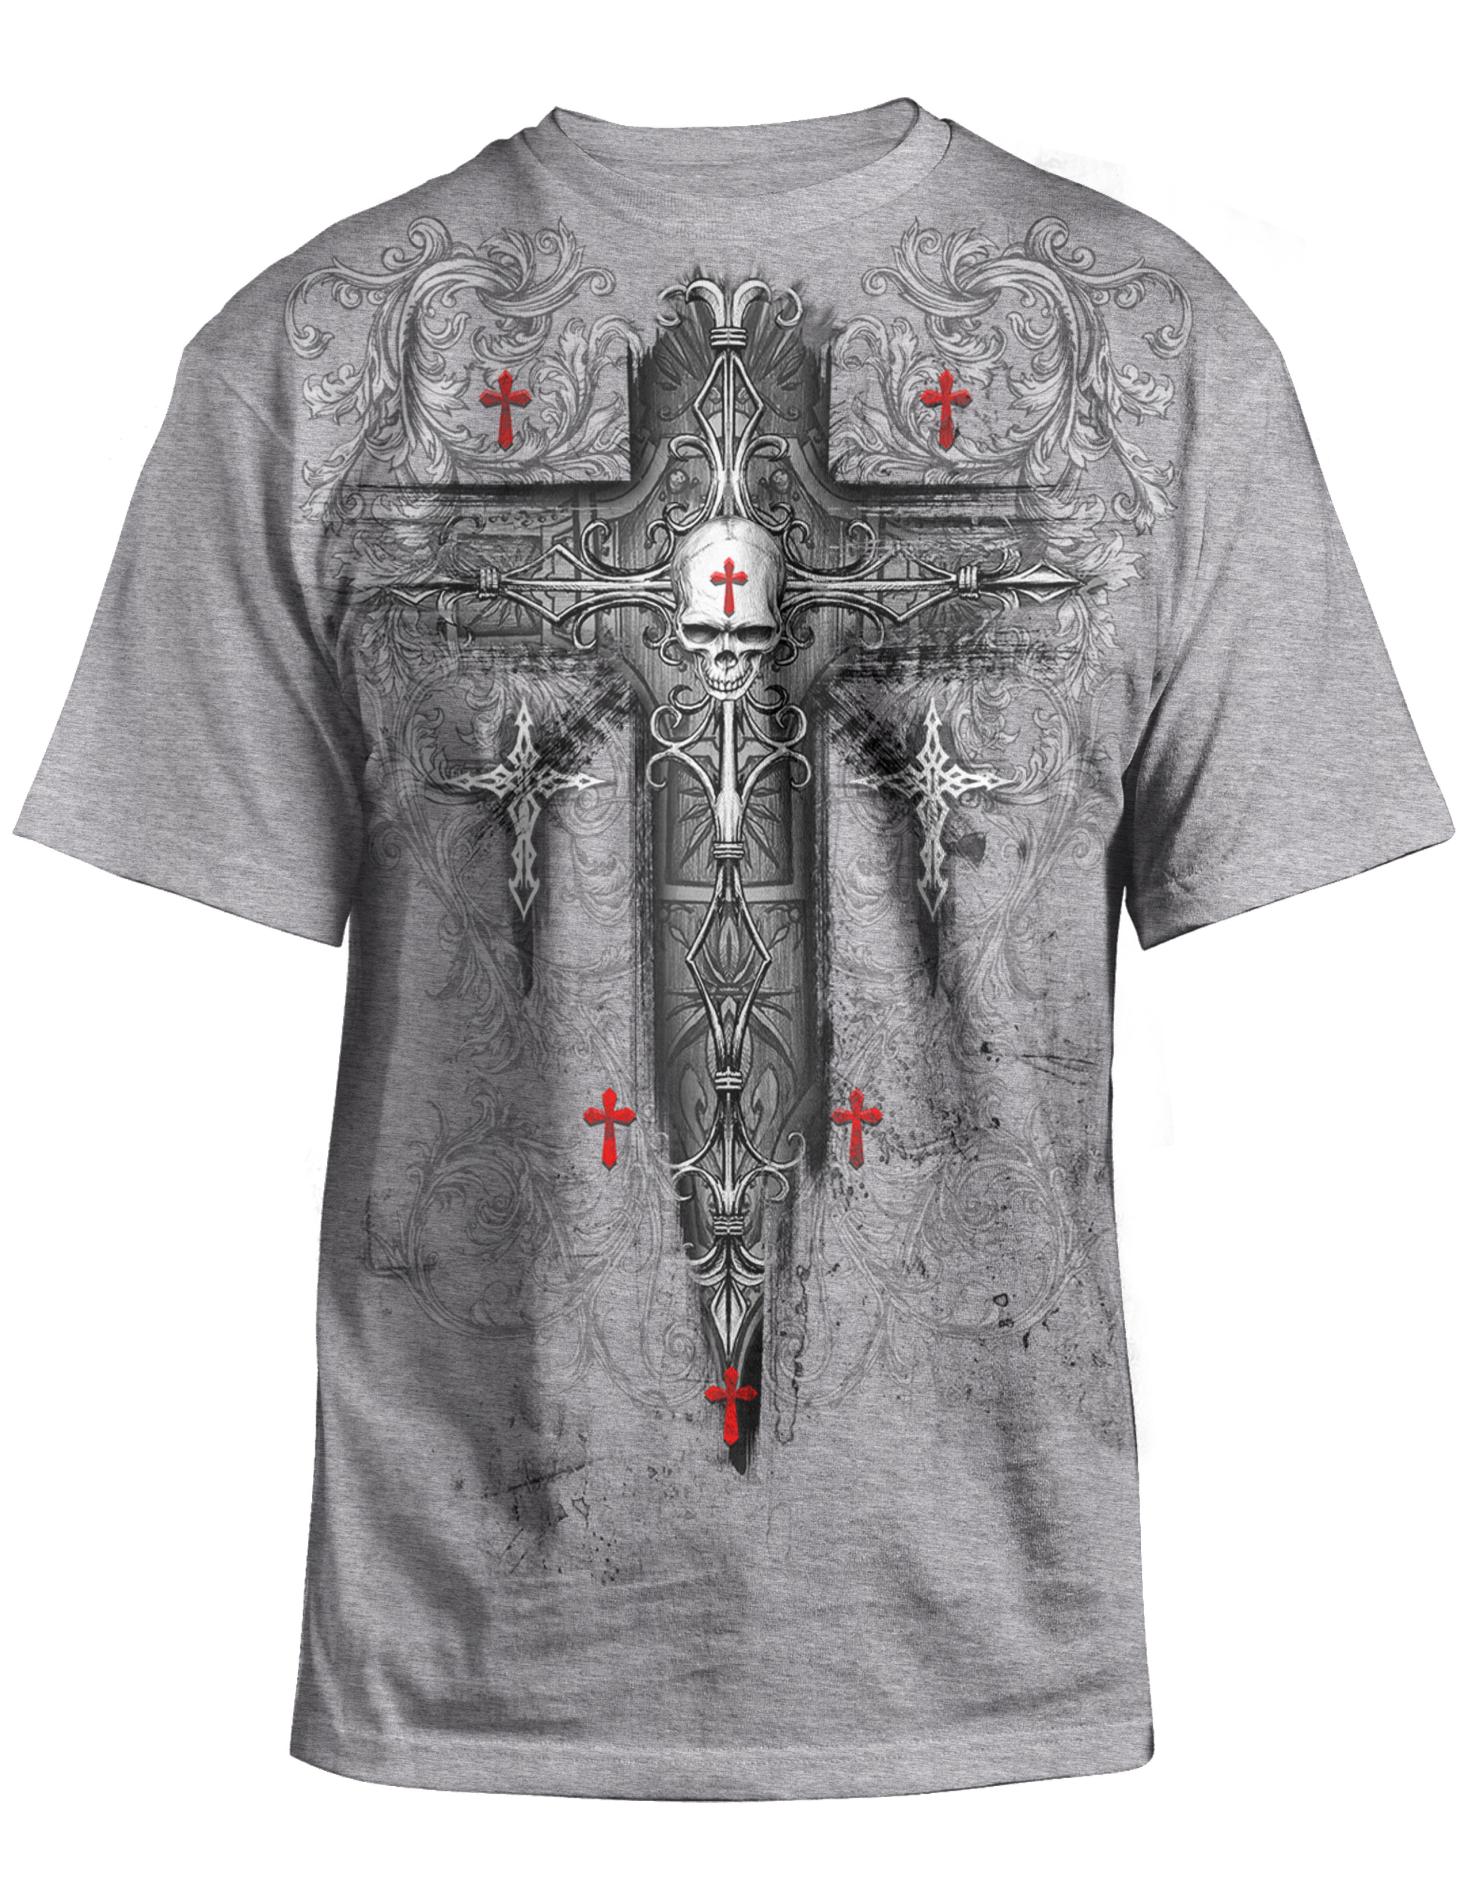 Men's Big & Tall Graphic T-Shirt - Cross